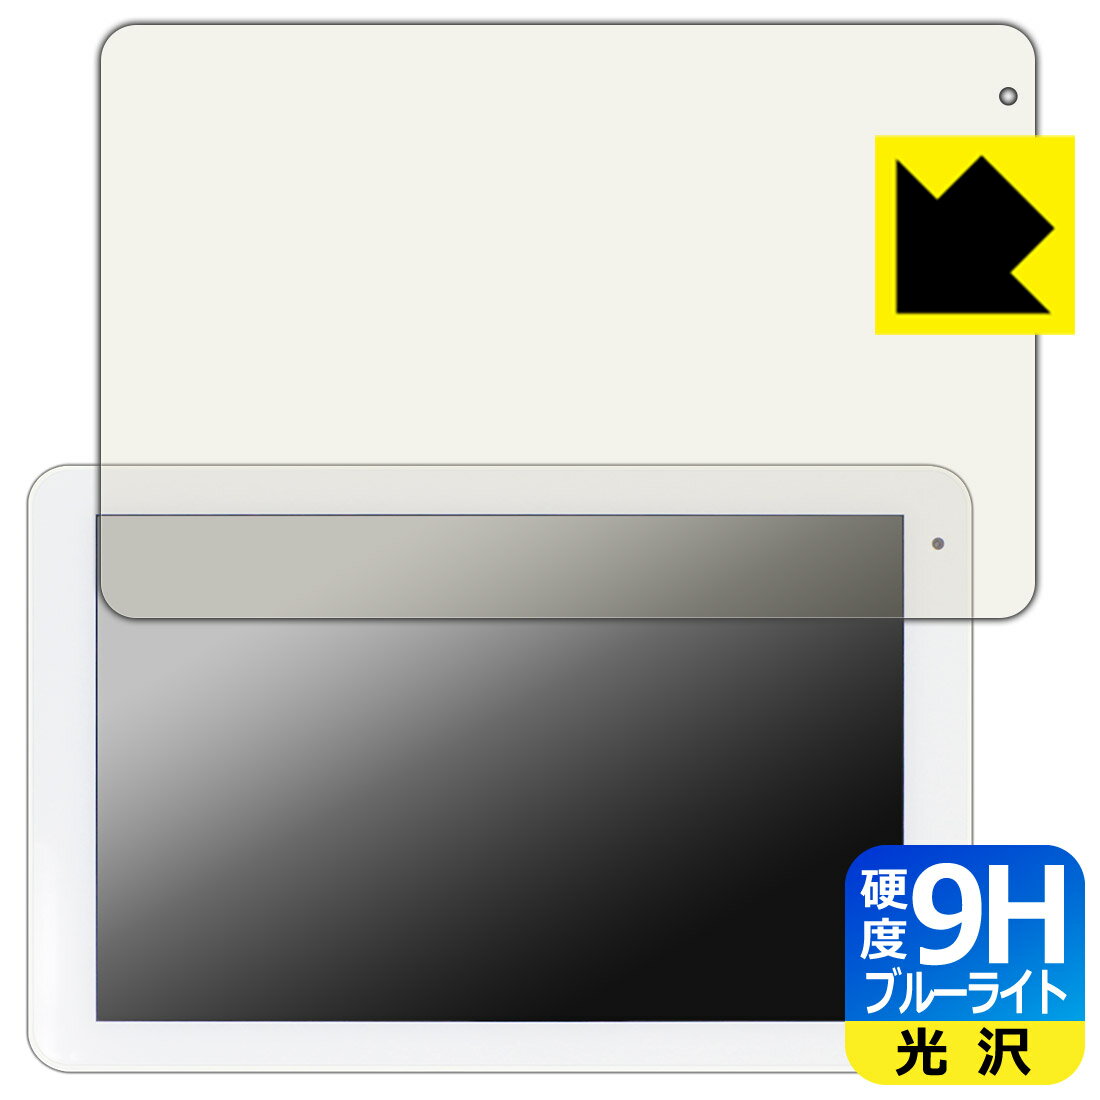 9H高硬度【ブルーライトカット】保護フィルム コミュファ光 10.1インチ タブレット AT-10 日本製 自社製造直販